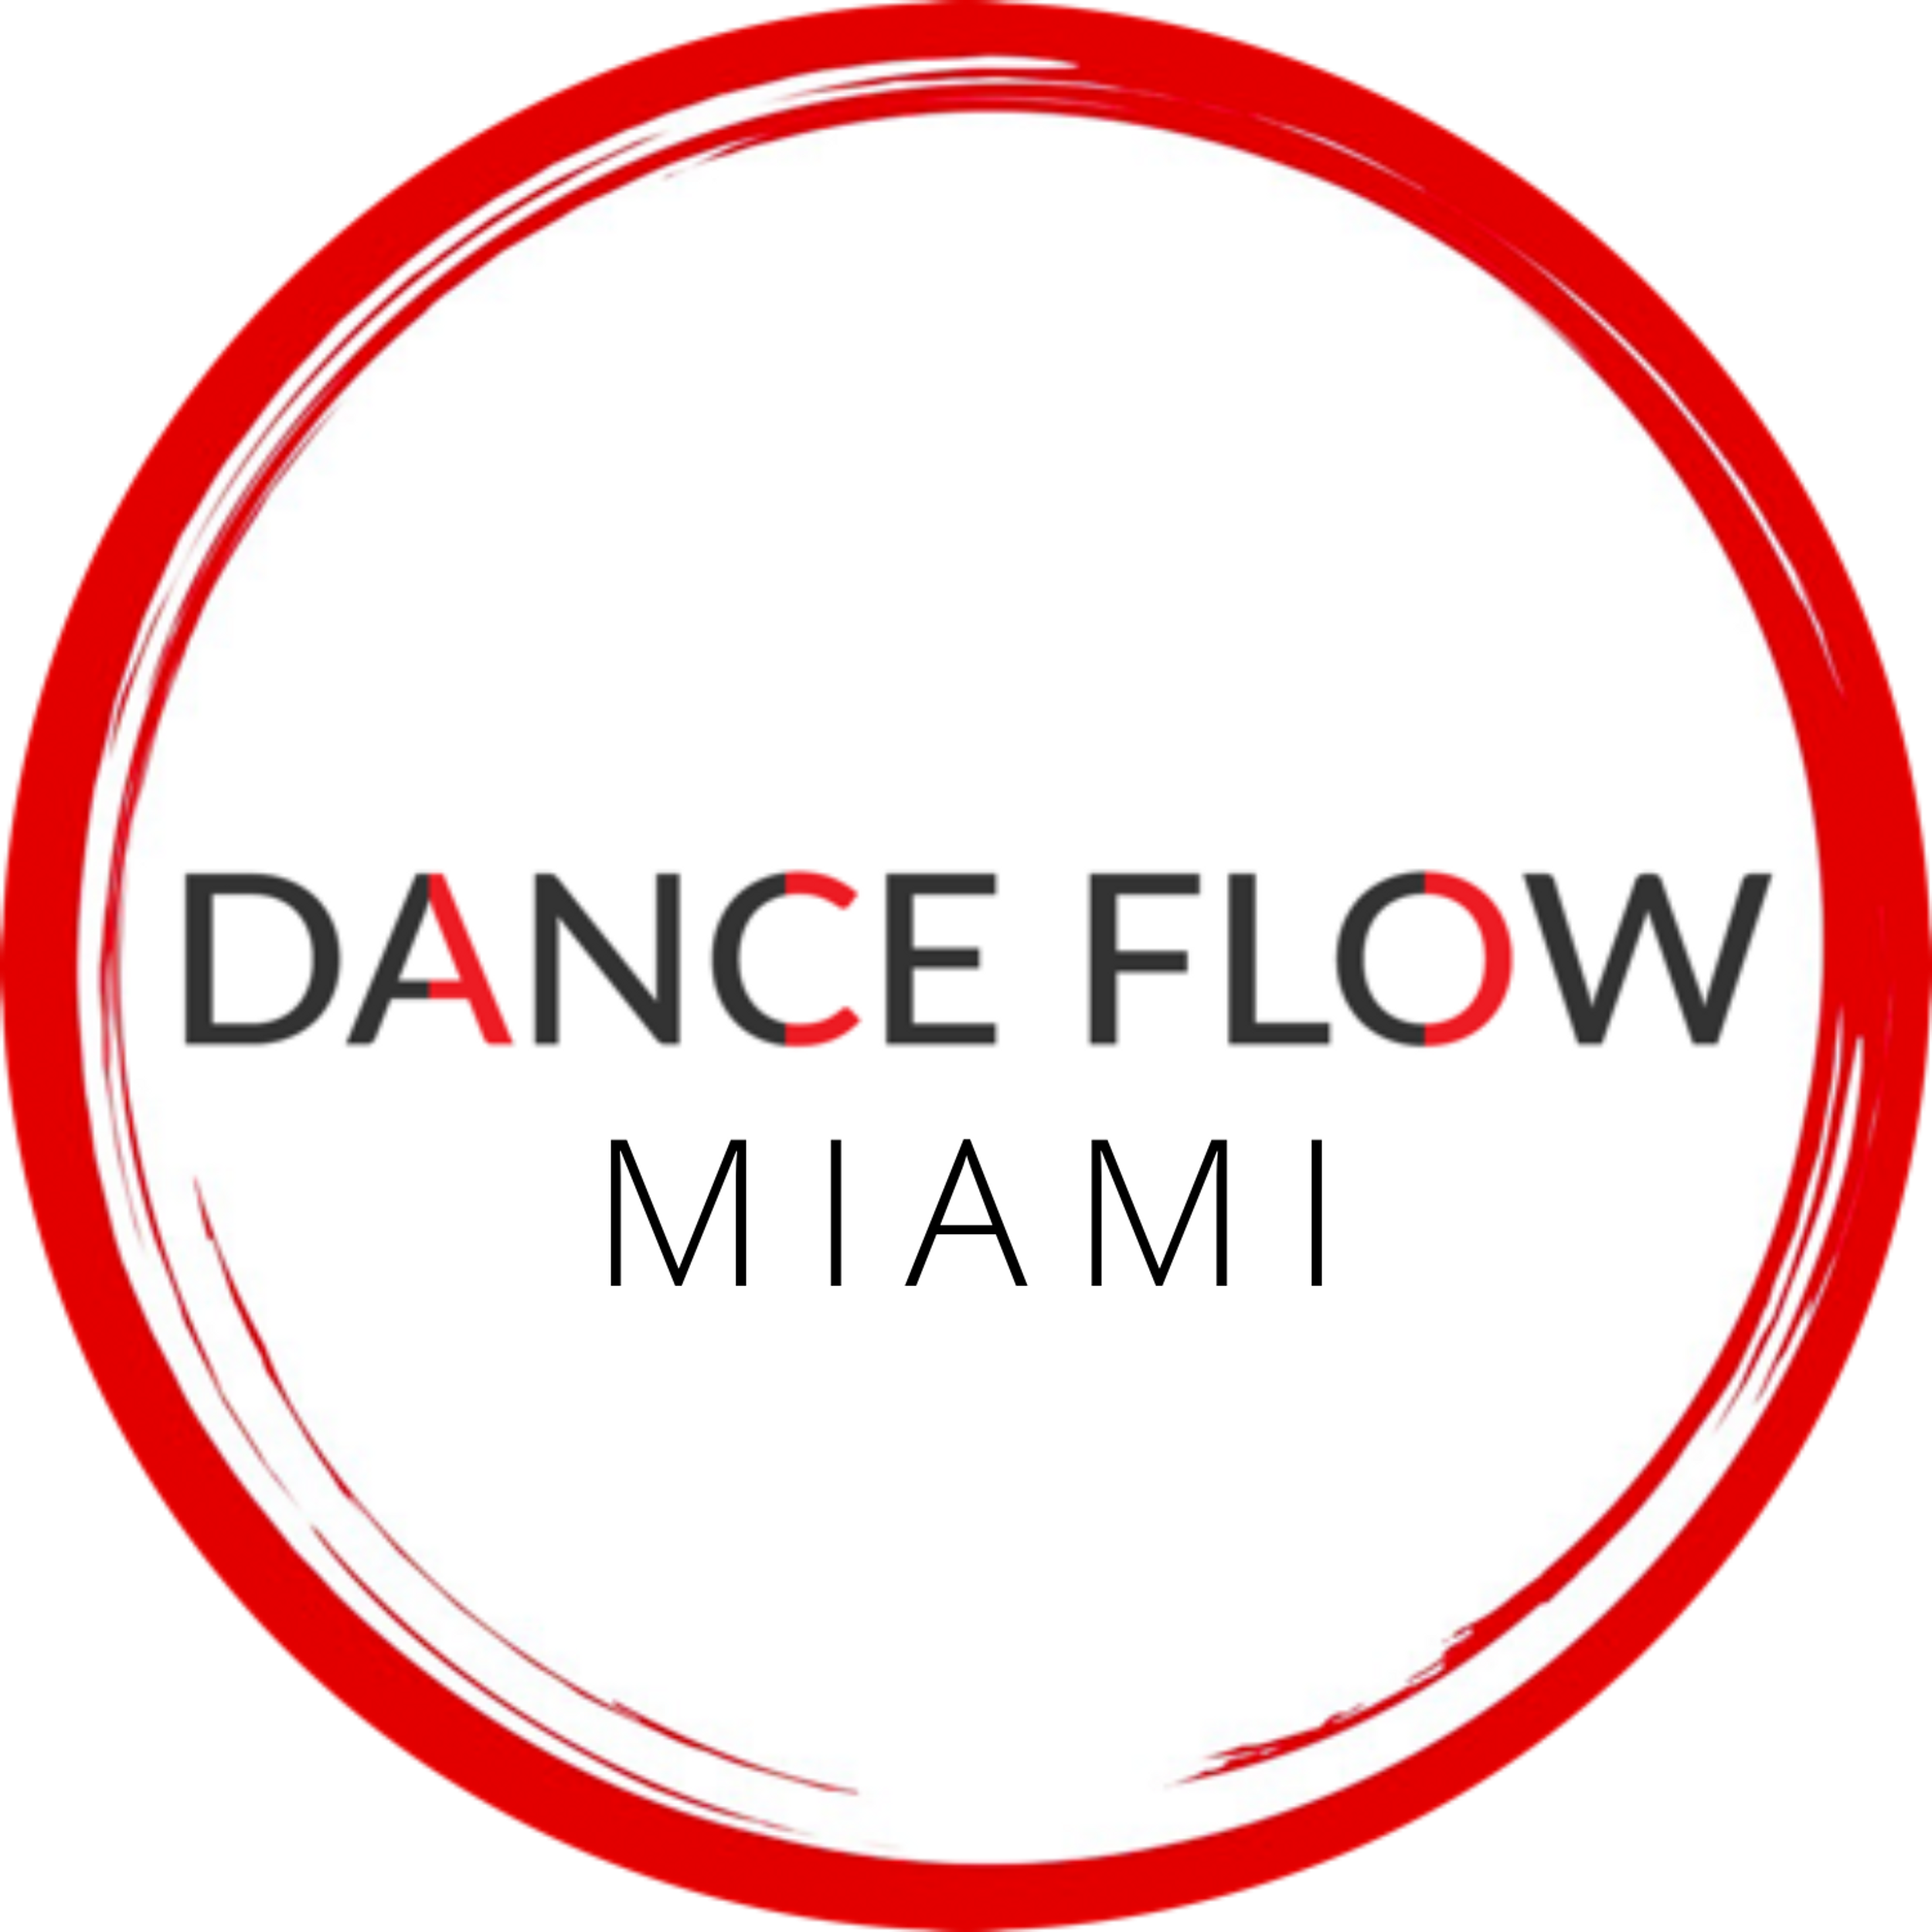 Ballroom Dance Private Lessons, Group Classes, Wedding Dance, Dance Flow Miami